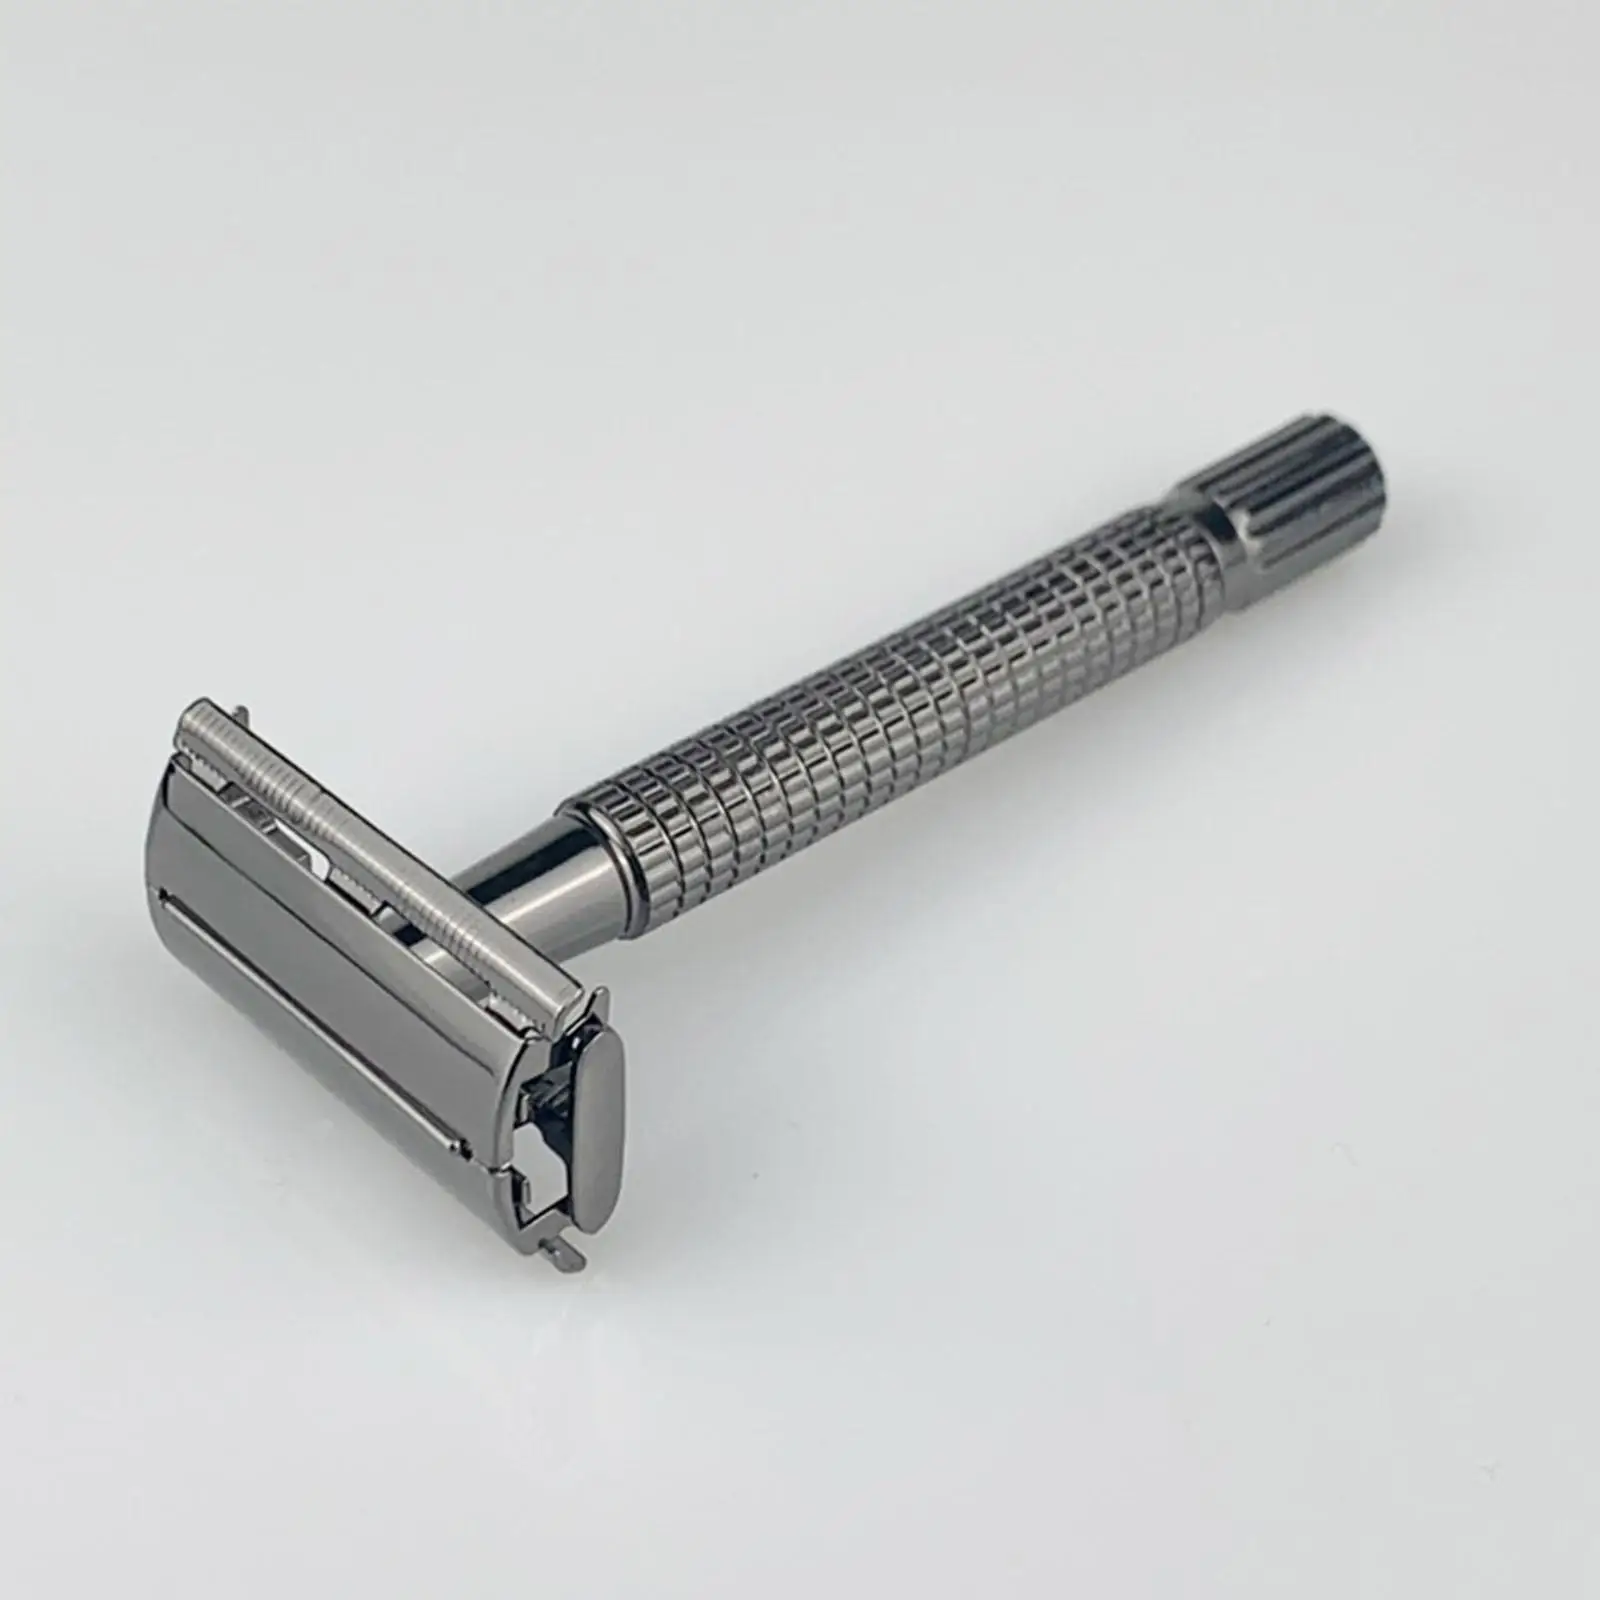 Manual Safety Razors, Classic Double Edge Shaver, Shaving with 5Pcs Blades Premium